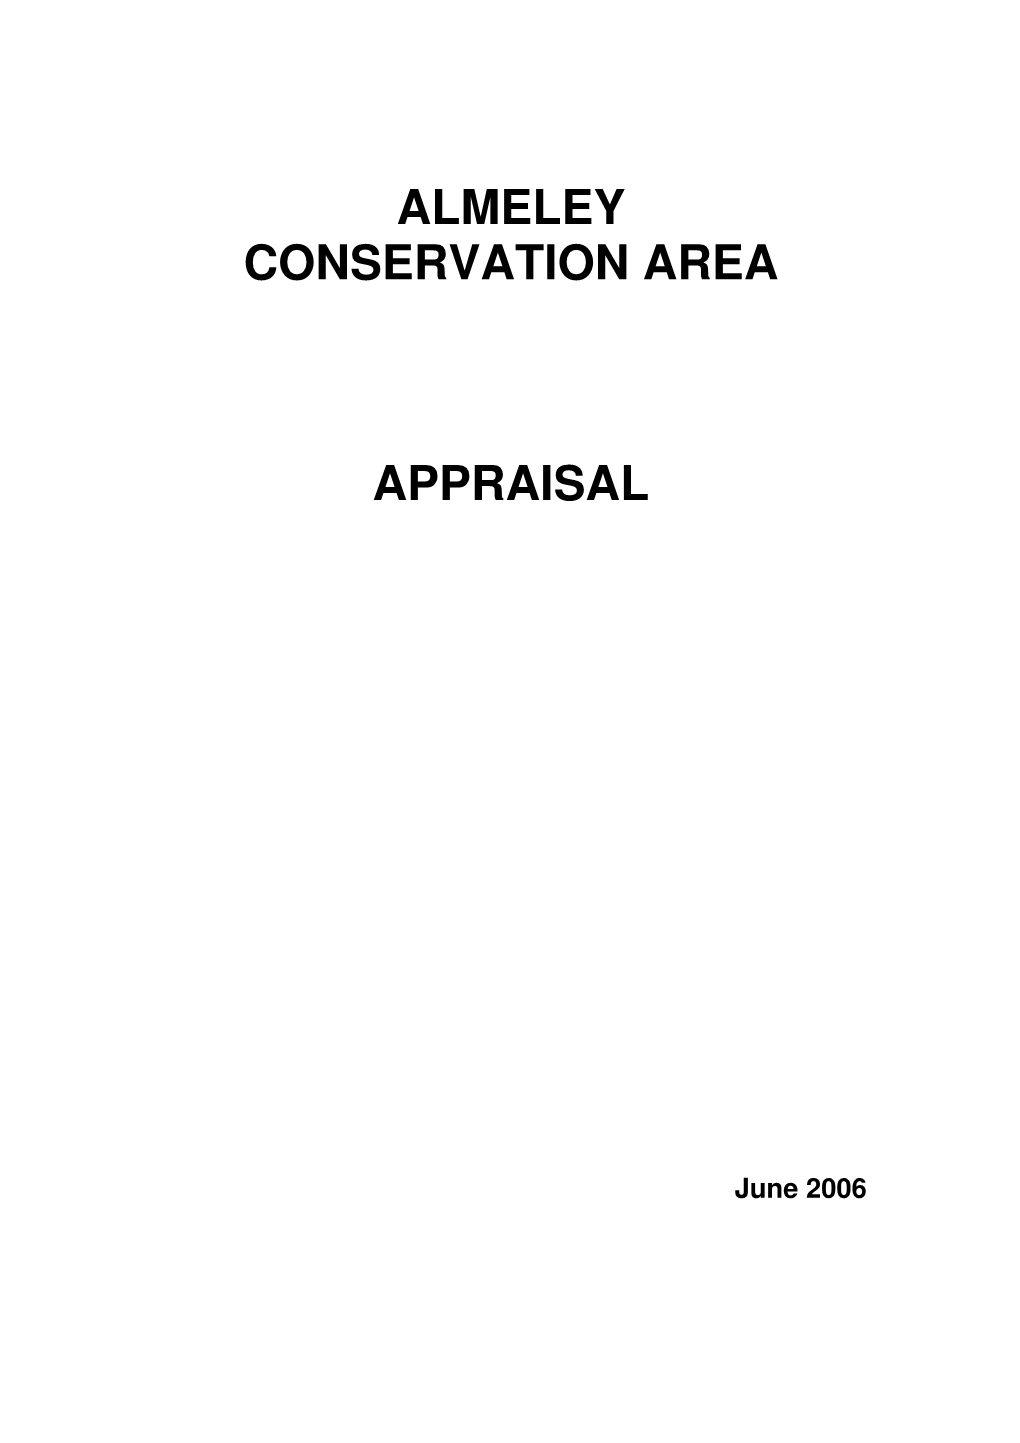 Almeley Conservation Area Appraisal